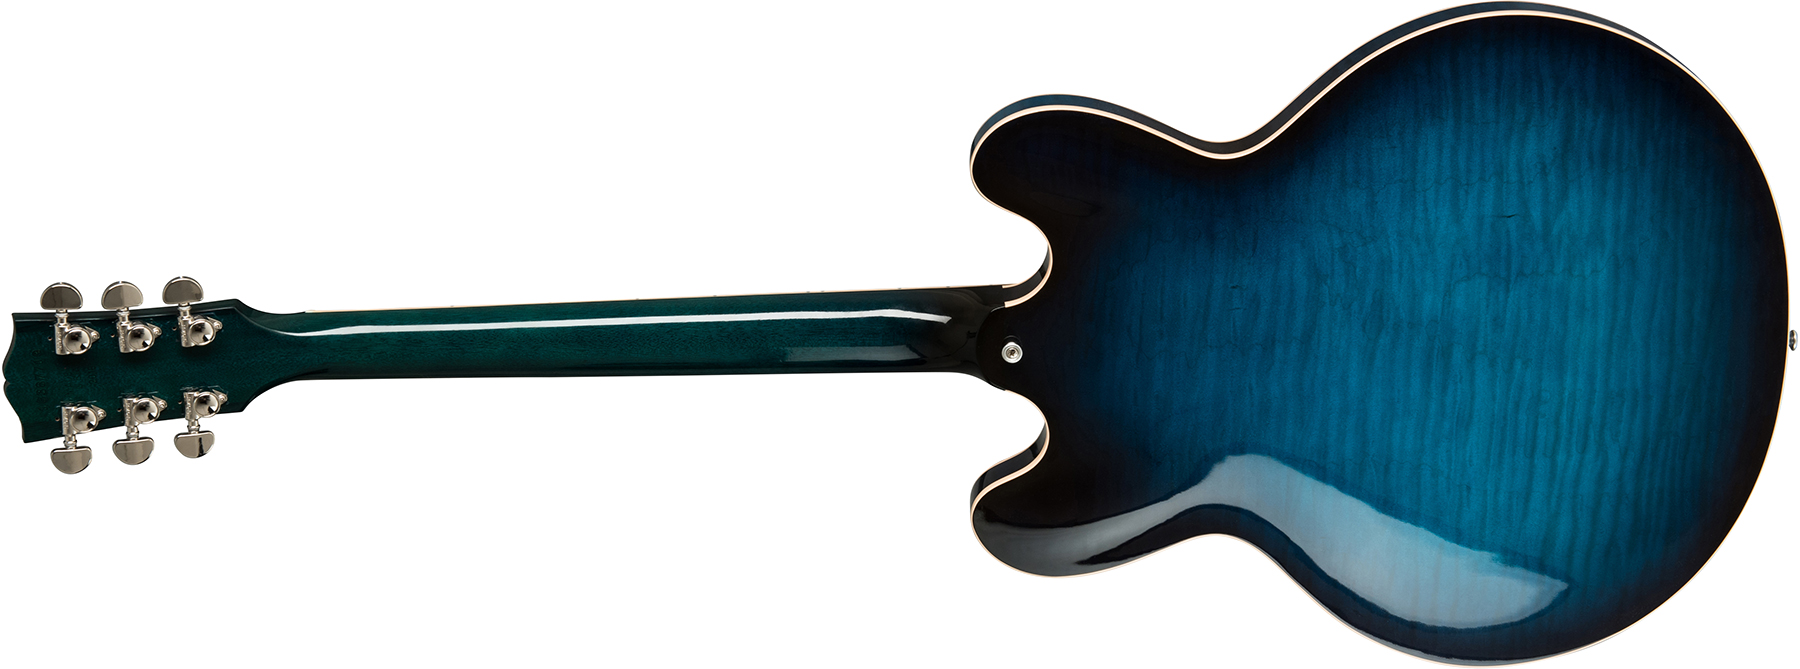 Gibson Es-335 Dot 2019 Hh Ht Rw - Blue Burst - Semi hollow elektriche gitaar - Variation 1